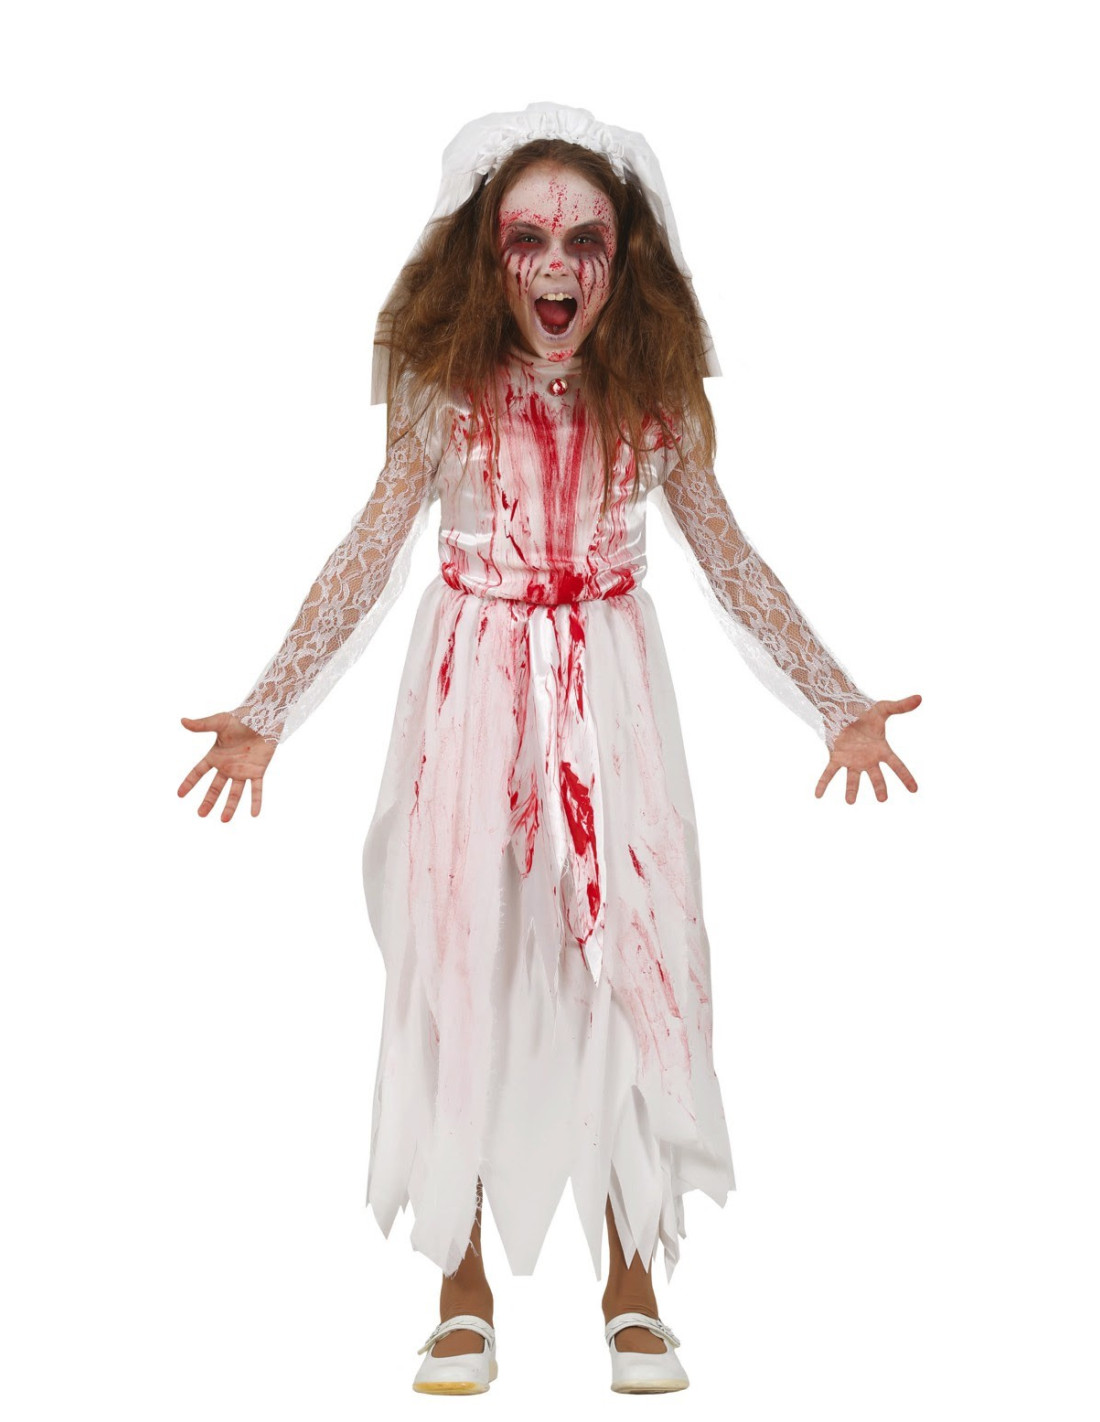 Descriptivo Exquisito Manuscrito Disfraz novia zombie infantil - Envío 24h|Disfraces Bacanal